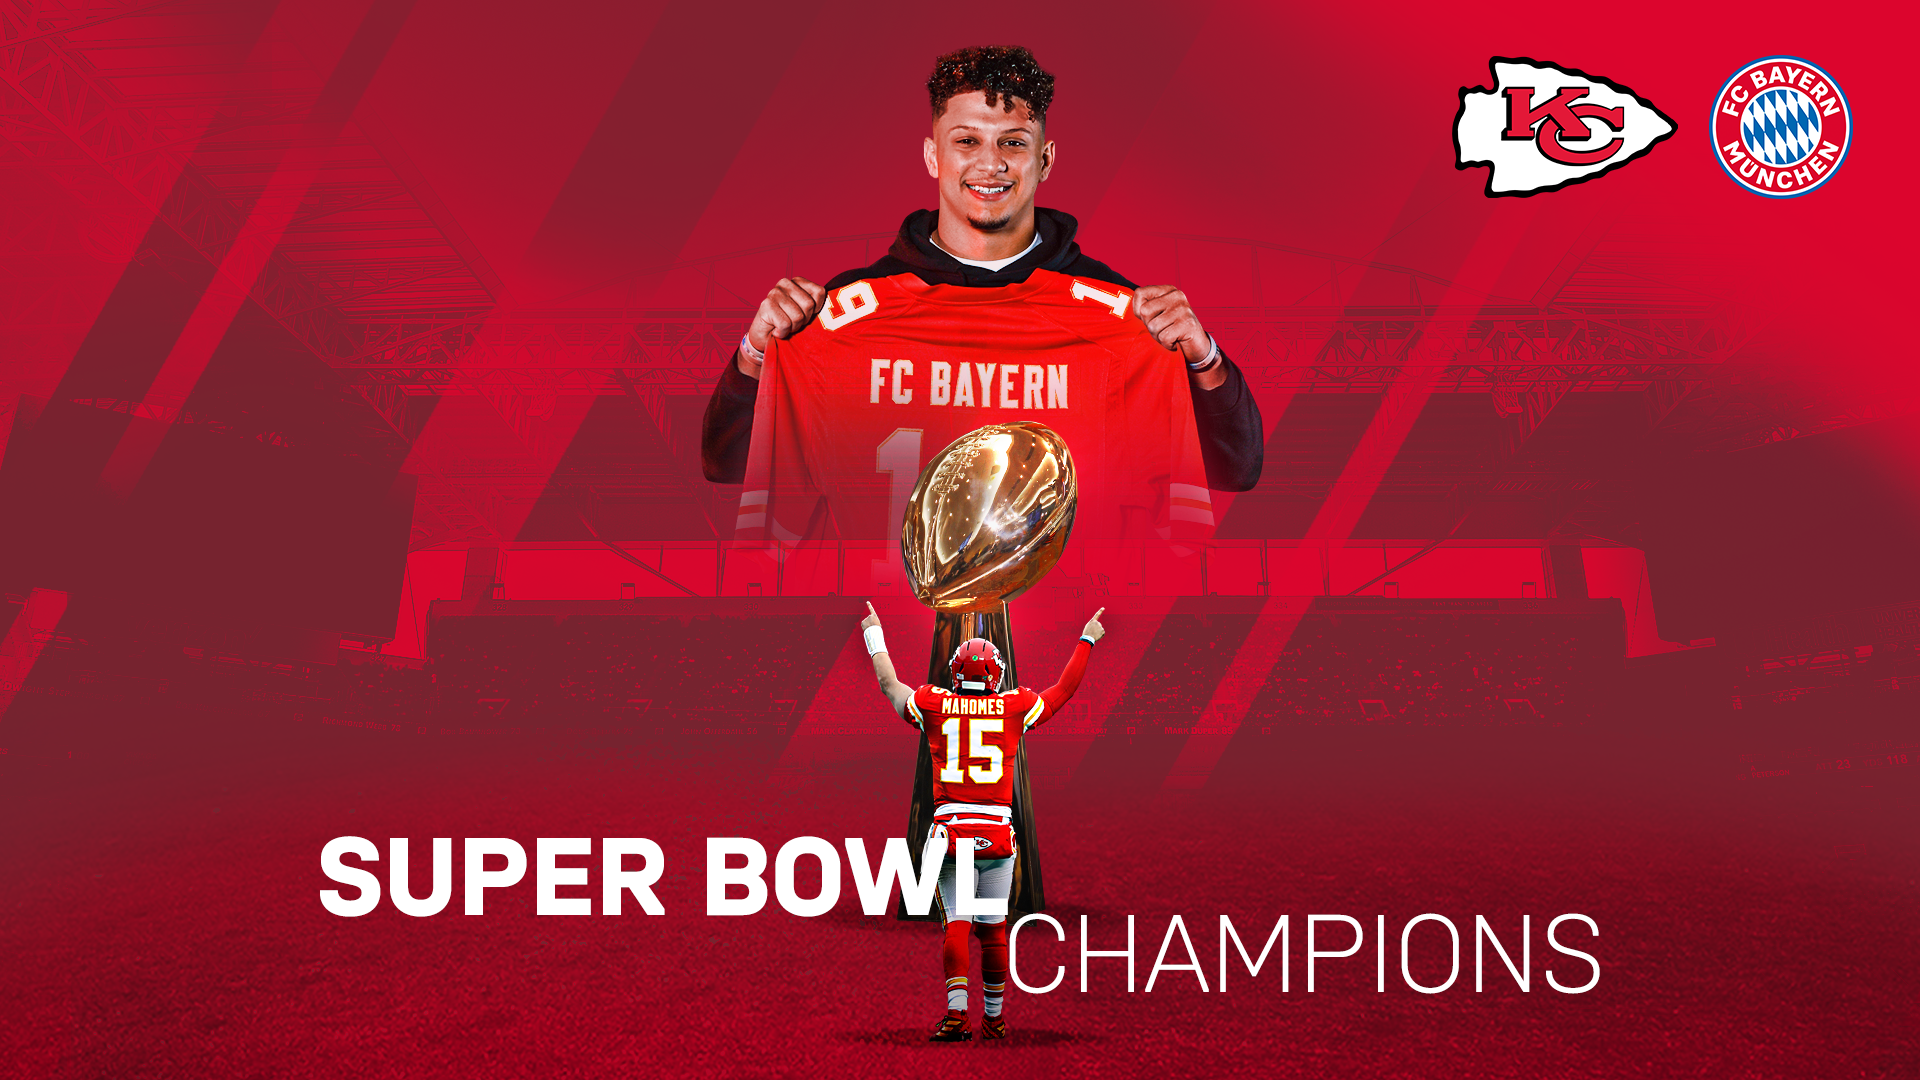 FC Bayern congratulate Super Bowl Champions Kansas City Chiefs